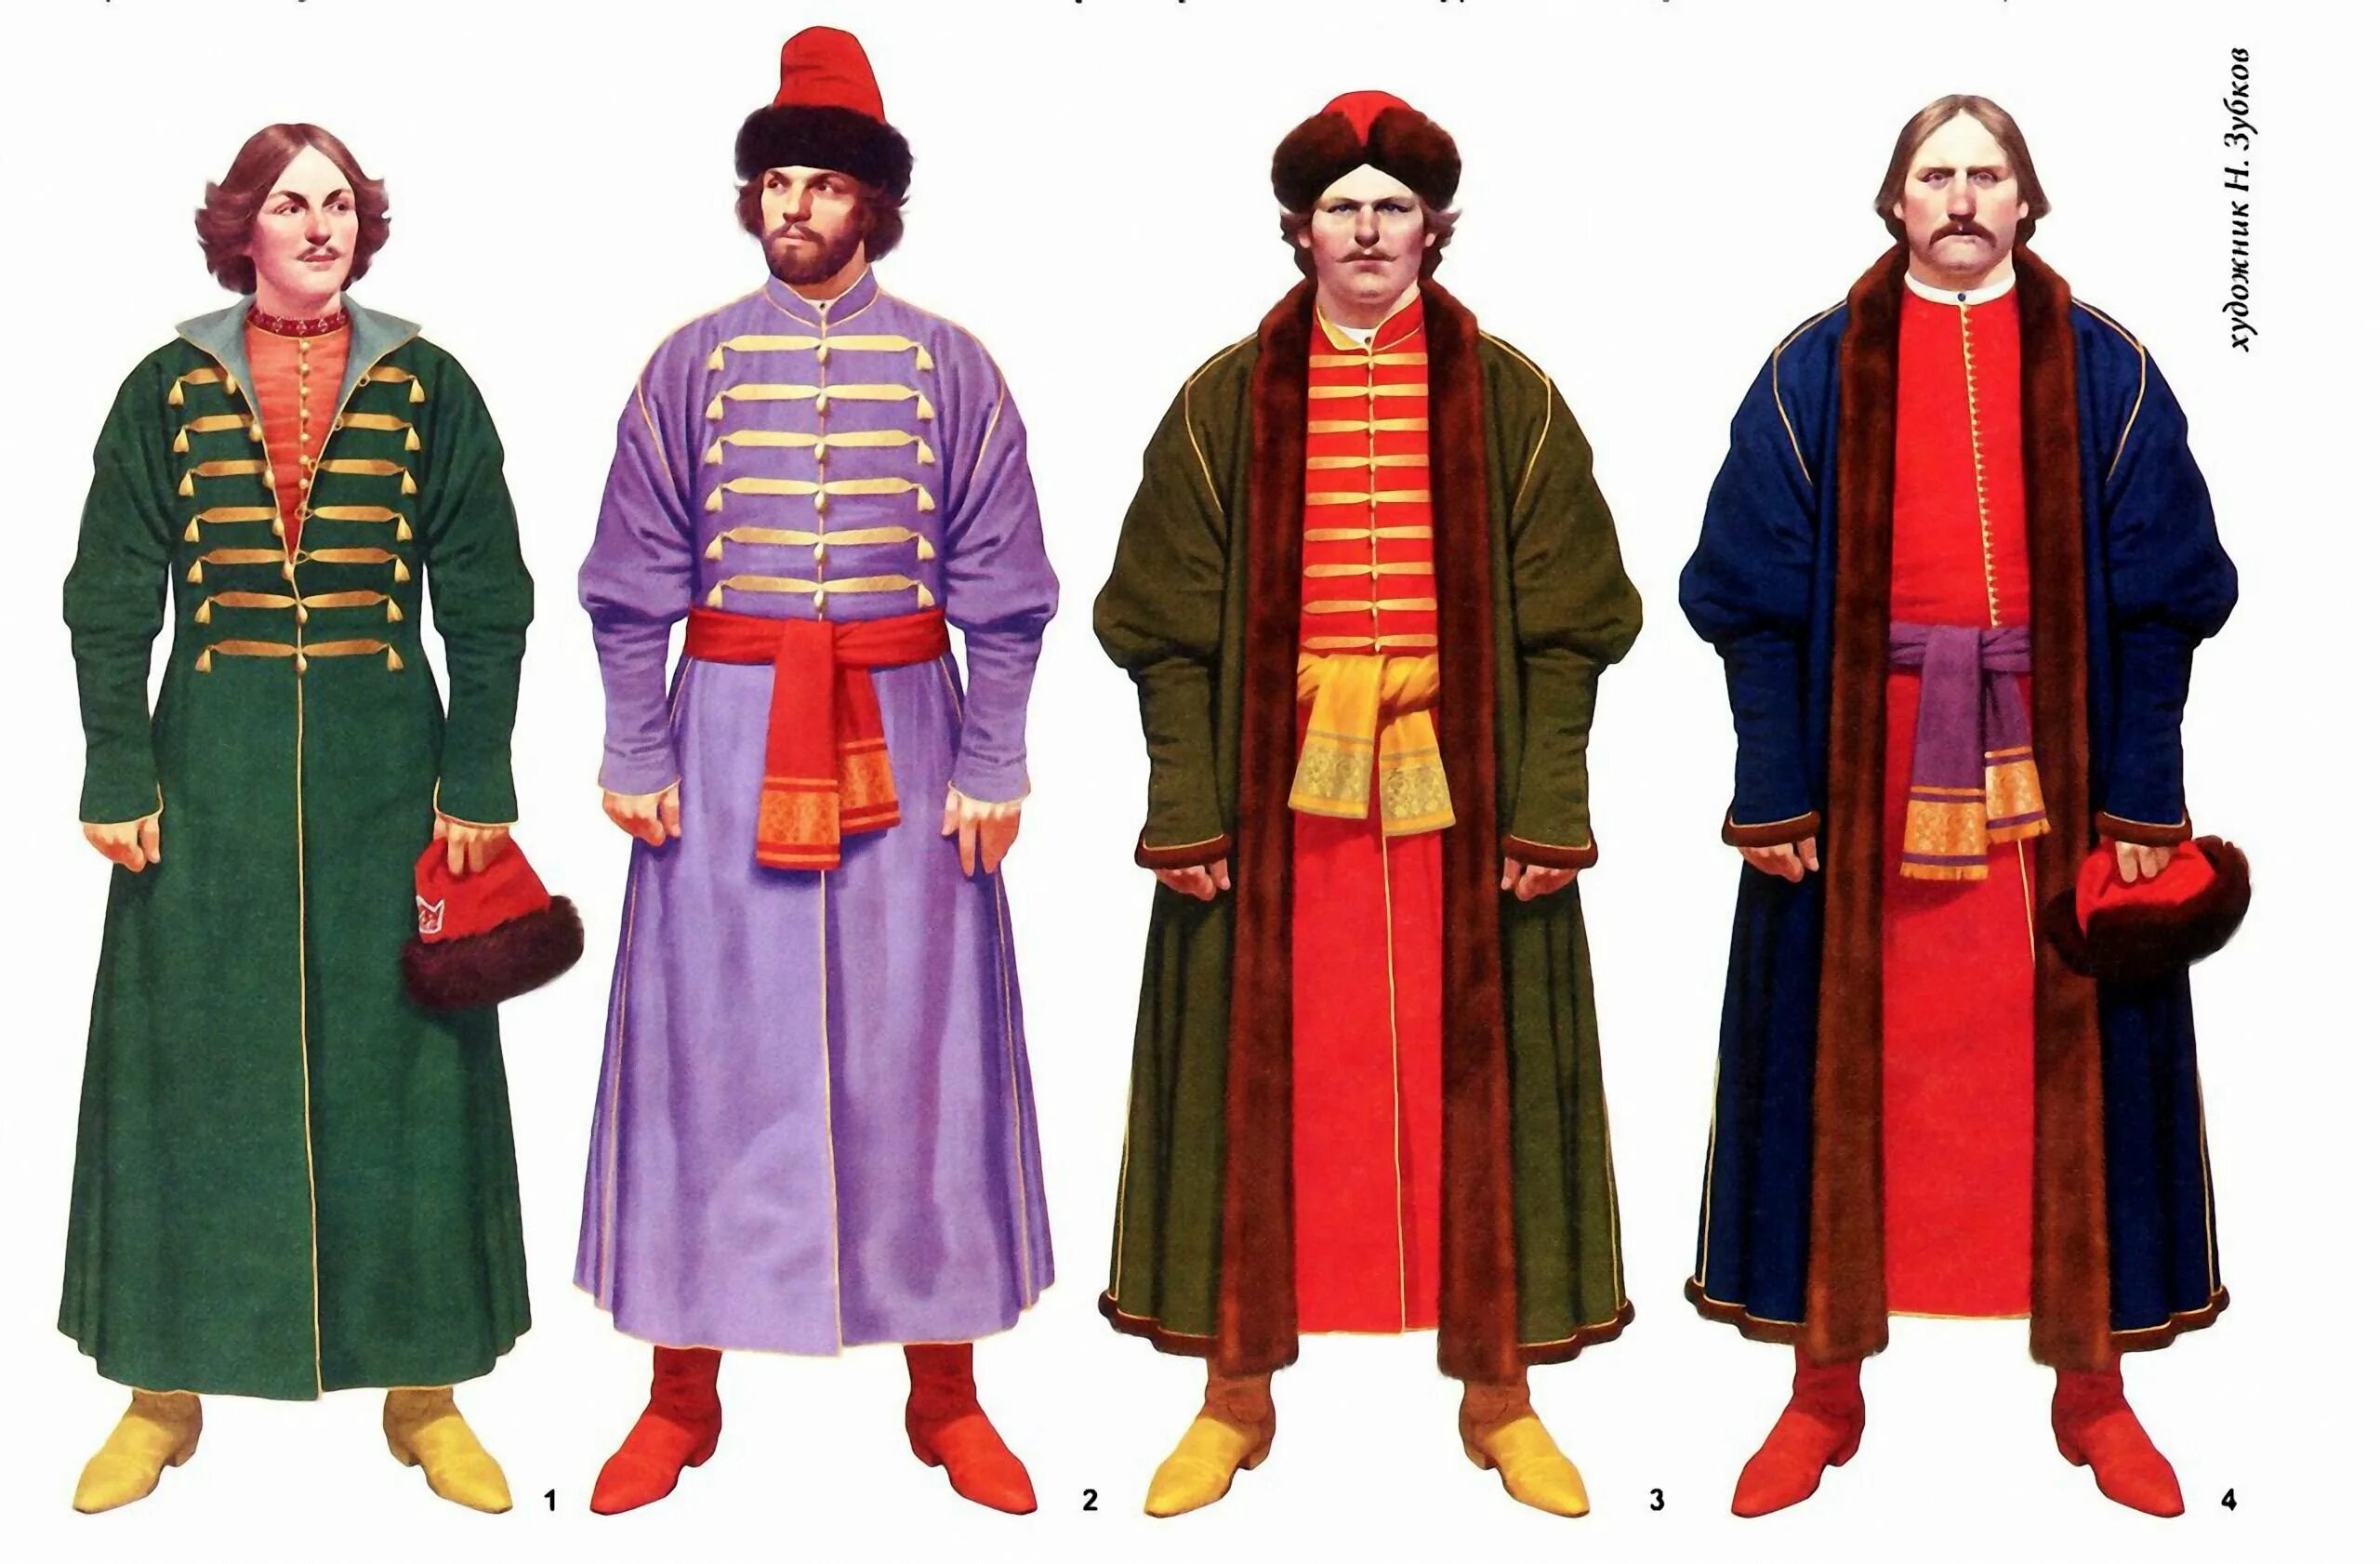 Боярский кафтан 17 век. Мужская одежда Русь 16 век. Зипун одежда 17 века. Одежда боя р16 - 17 века. Старинная мужская верхняя